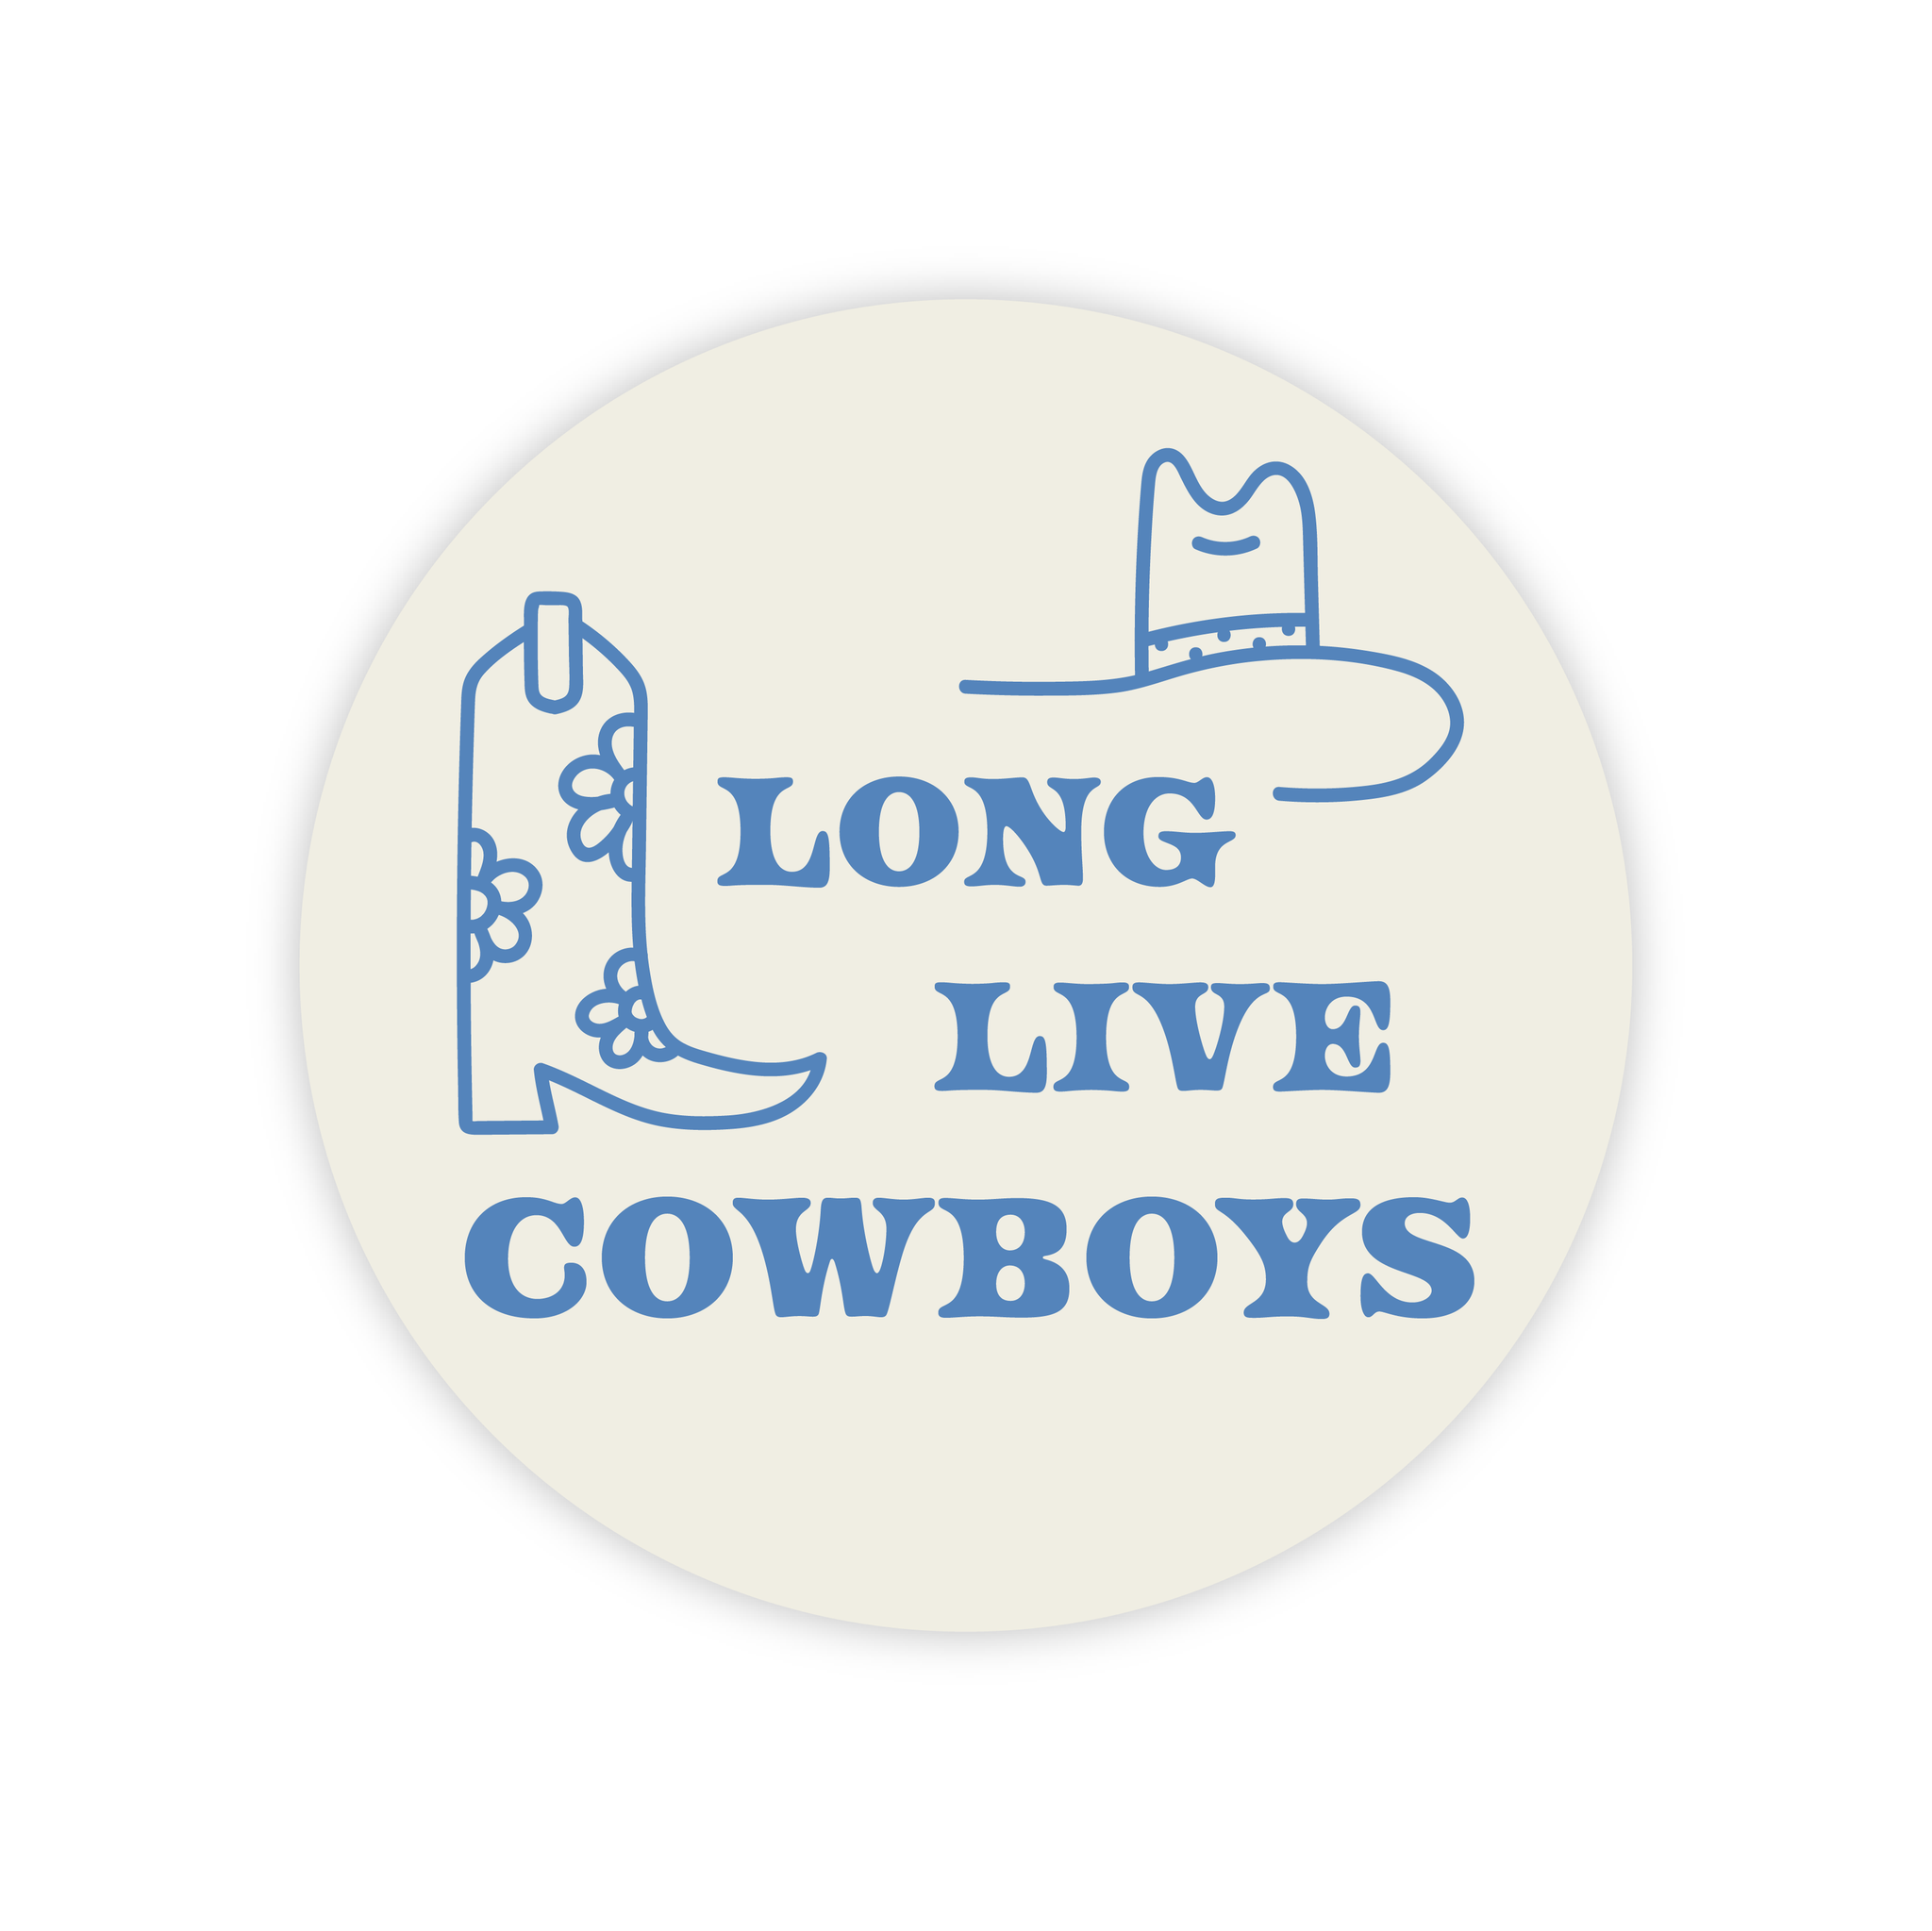 cowboys live